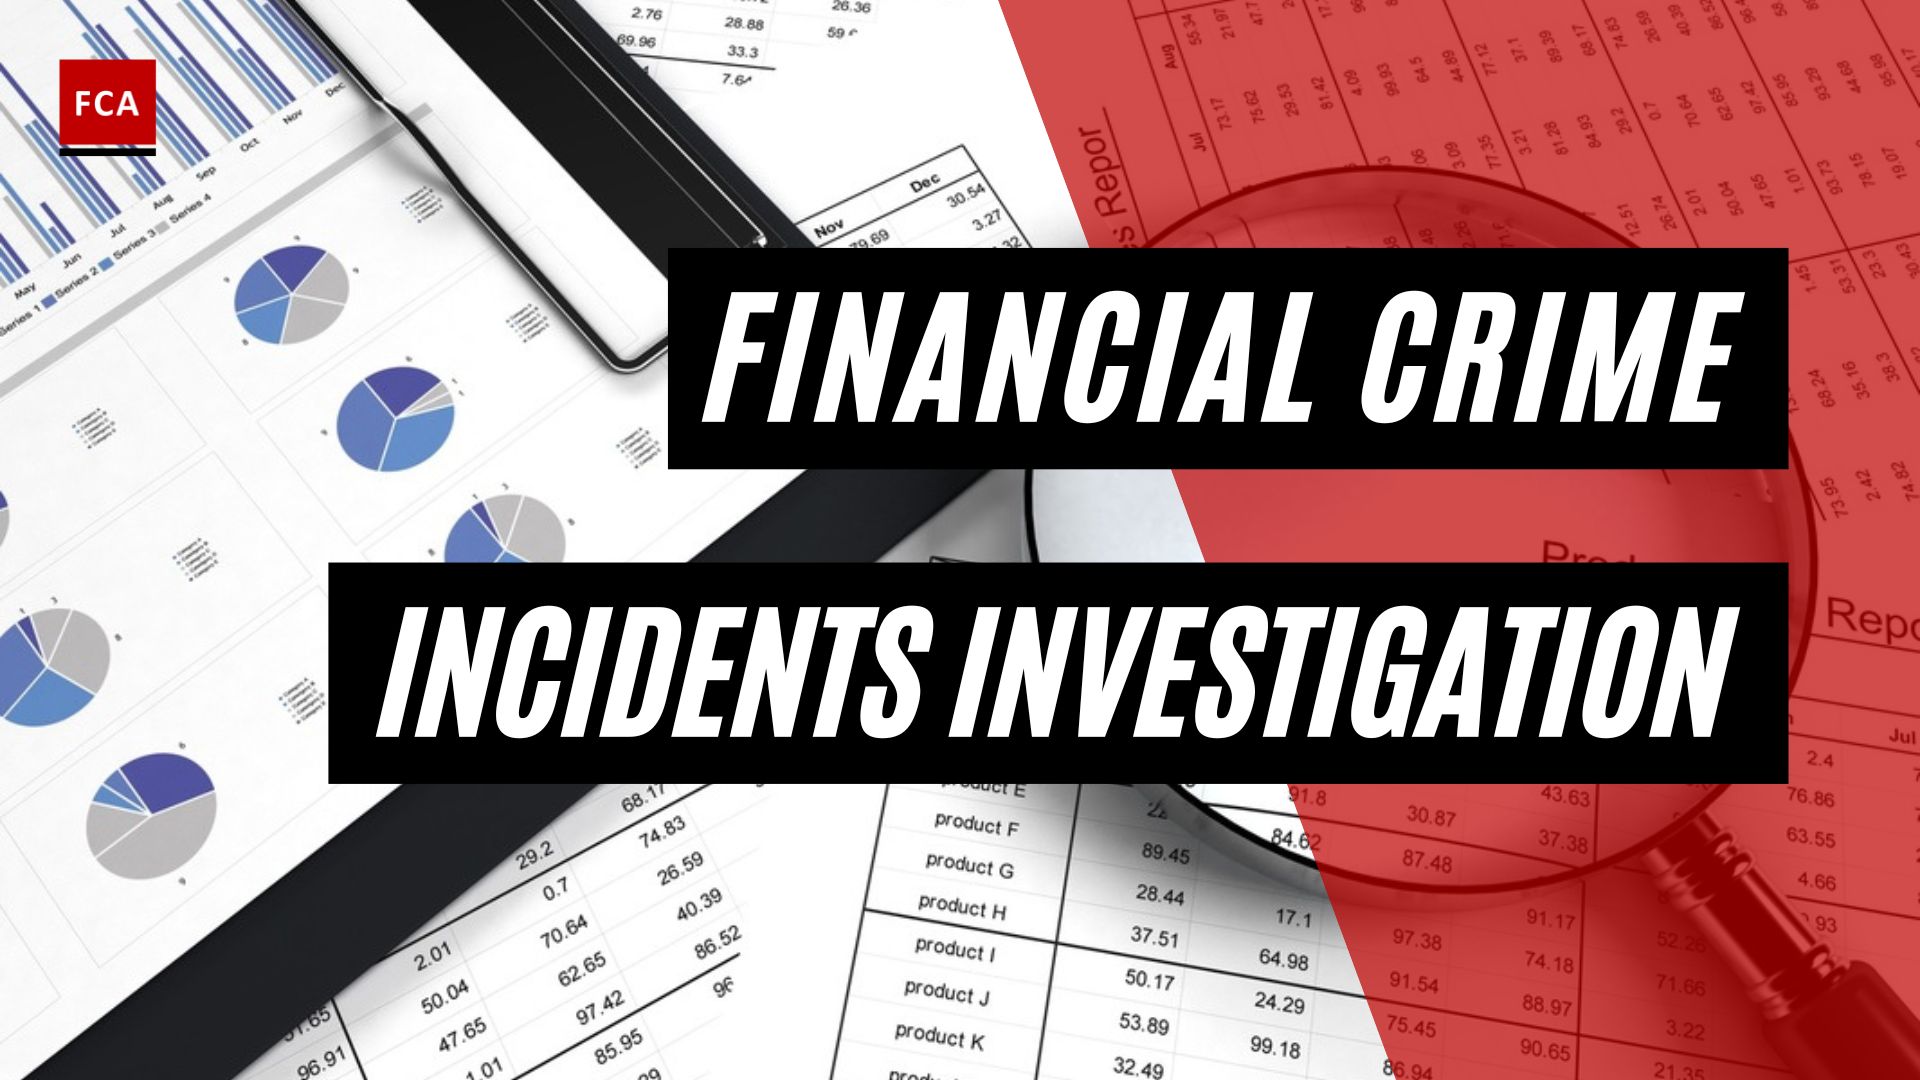 Financial Crime Incidents Investigation